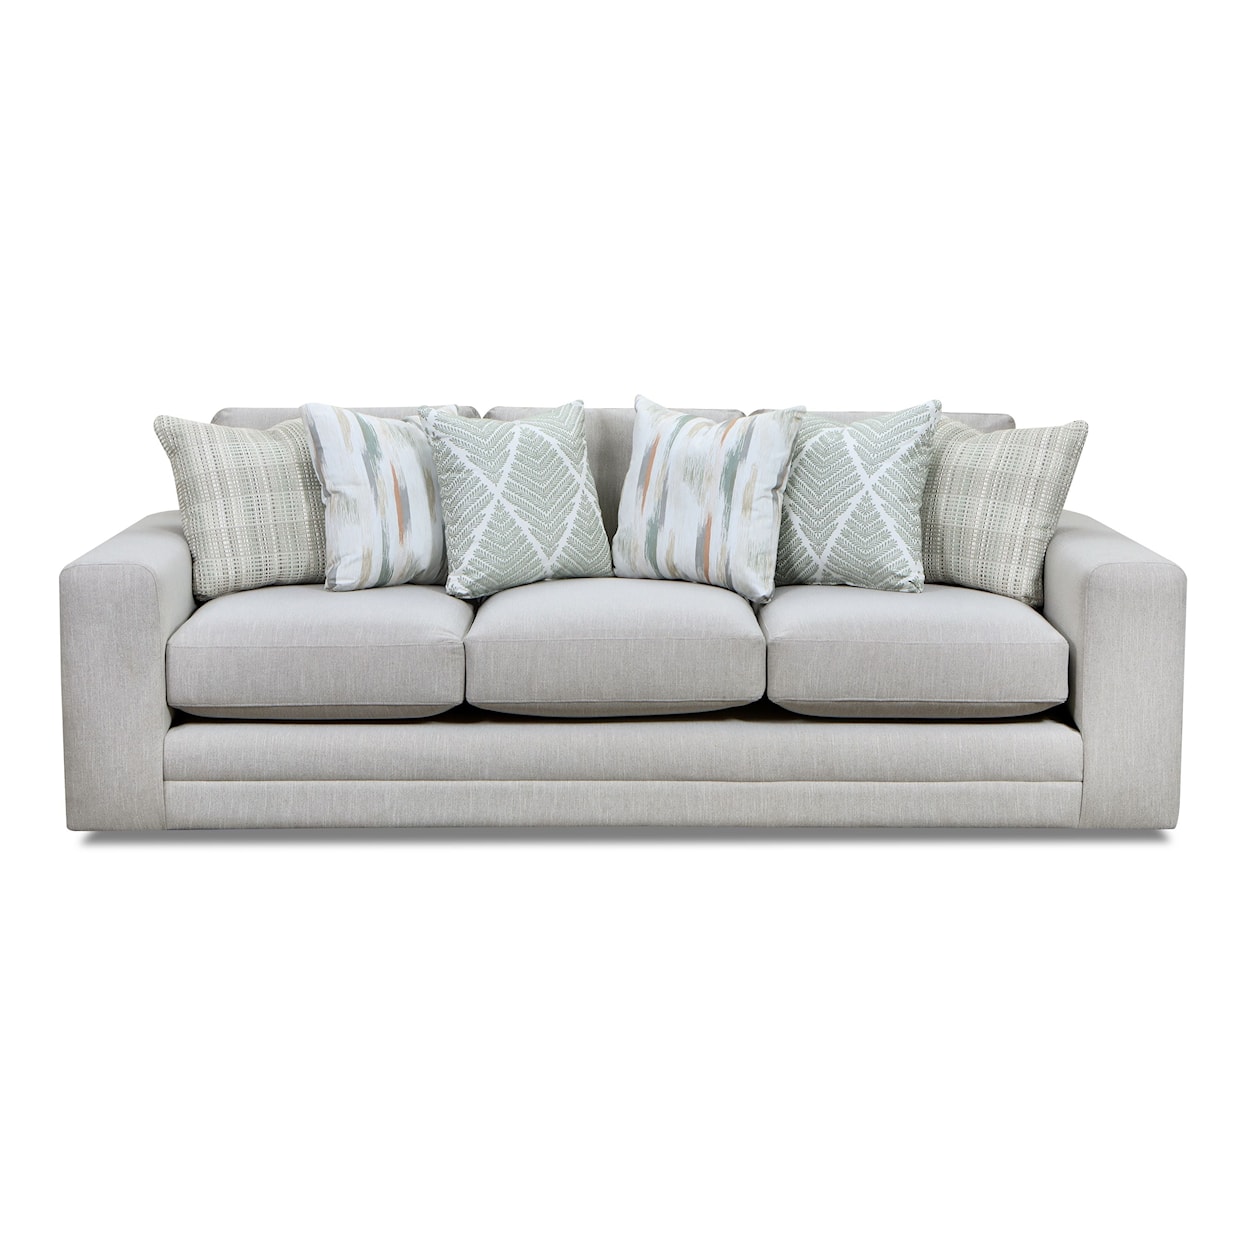 Fusion Furniture 7000 CHARLOTTE CREMINI Sofa